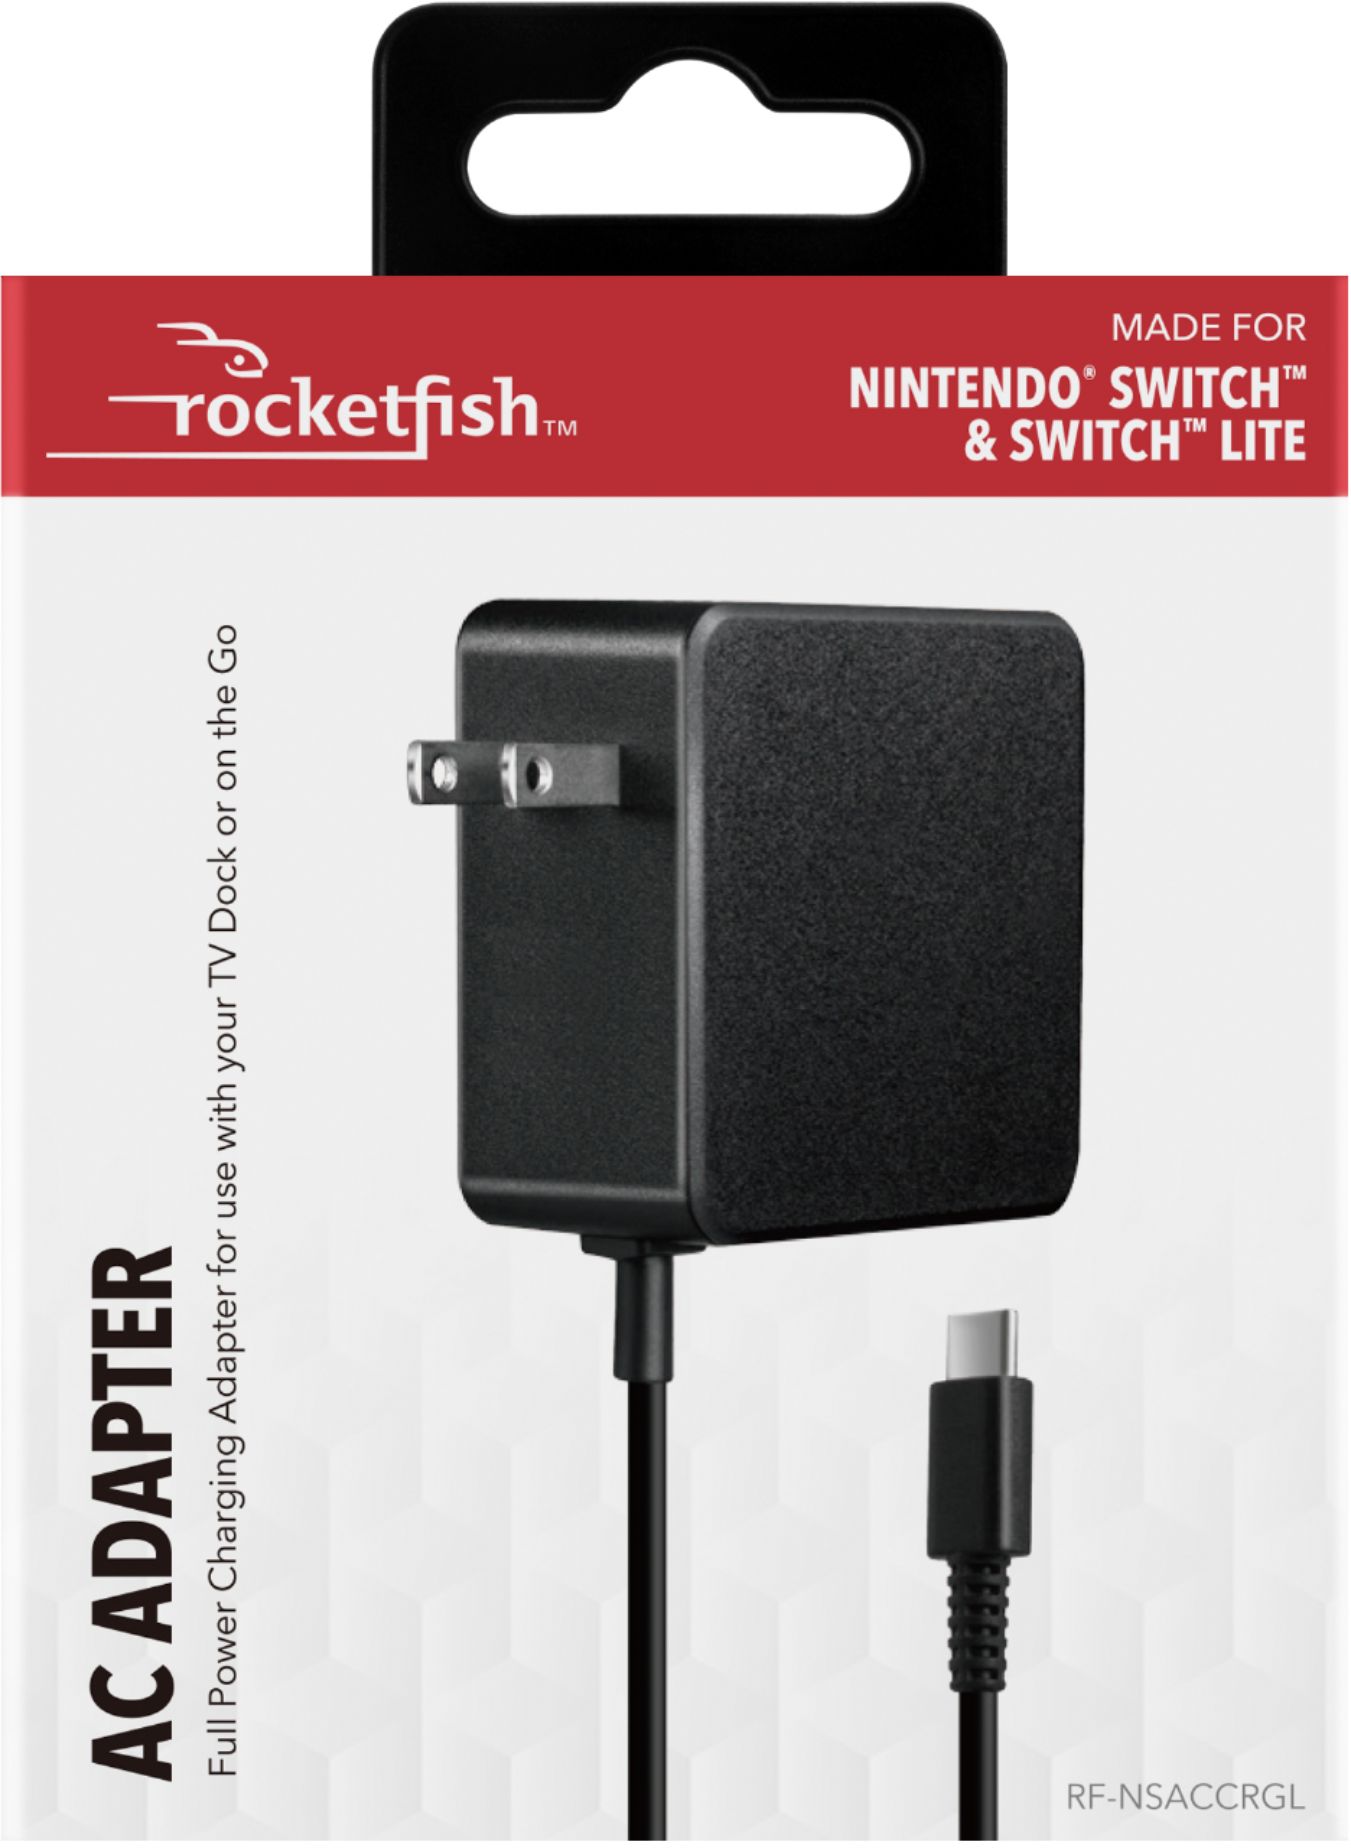 Rocketfish™ USB-C Mobile Power Kit For Nintendo Switch, Switch OLED & Switch  Lite Black RF-NSPWRPK - Best Buy